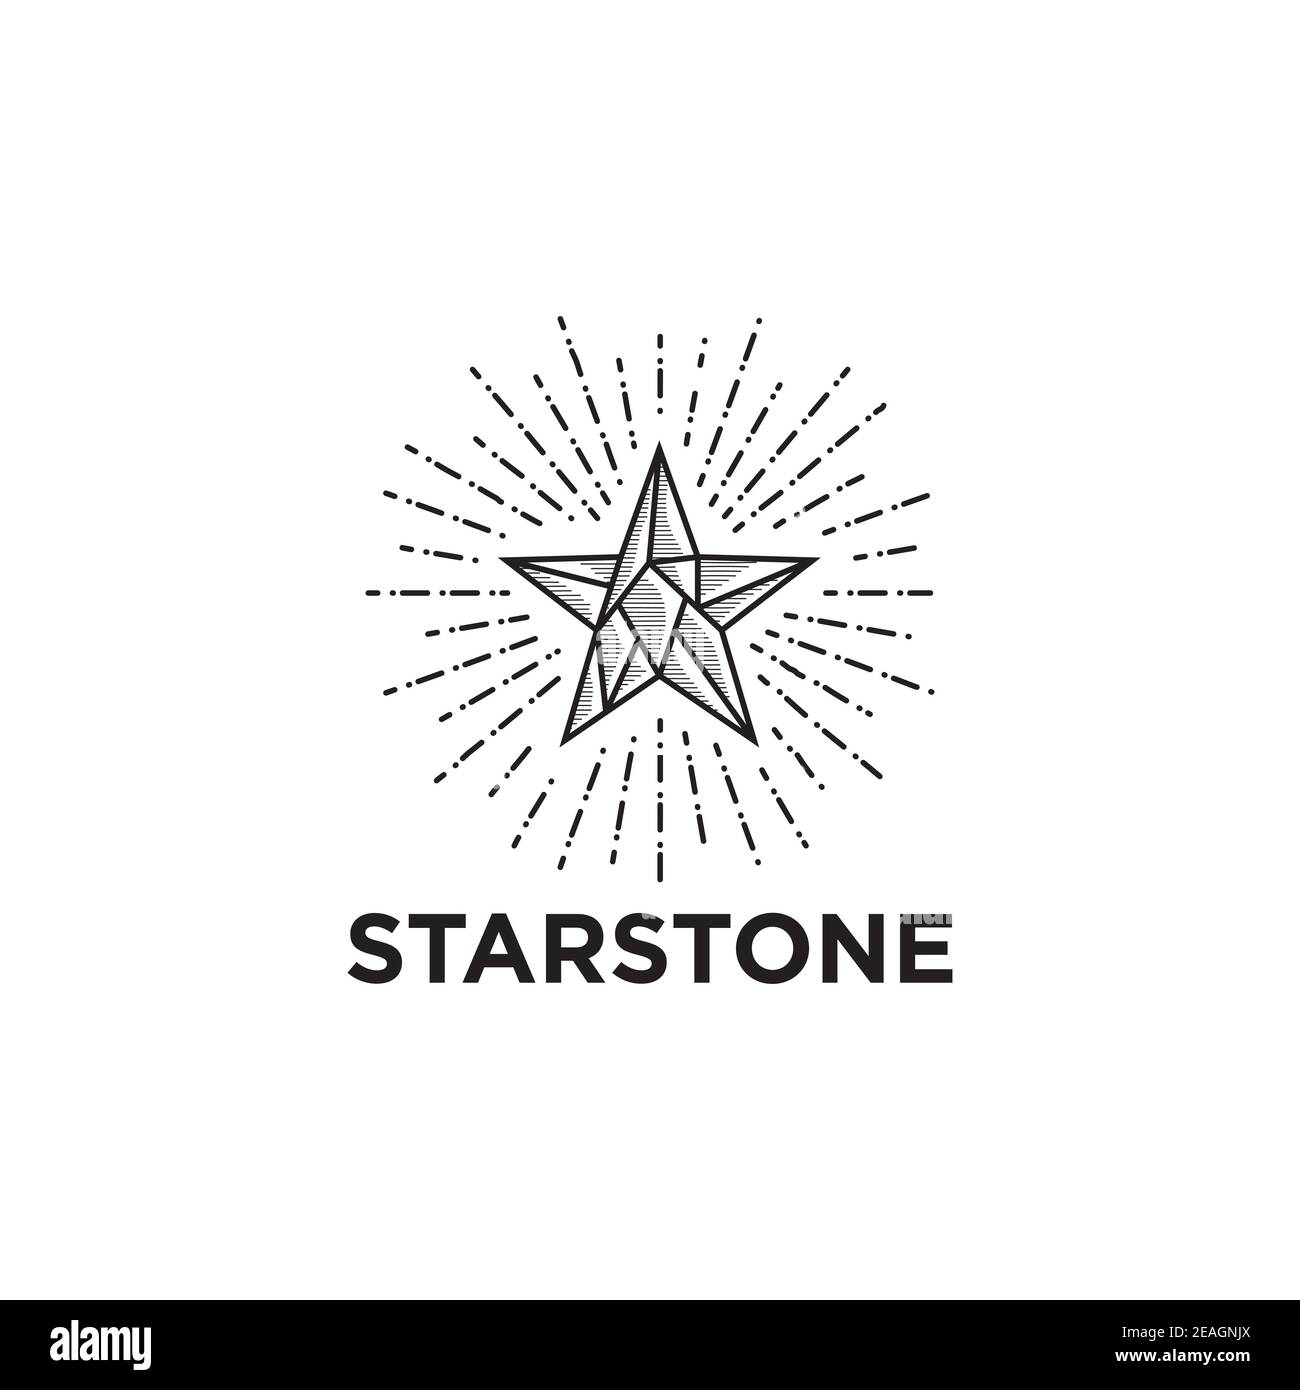 Star stone illustration logo design vector template Stock Vector